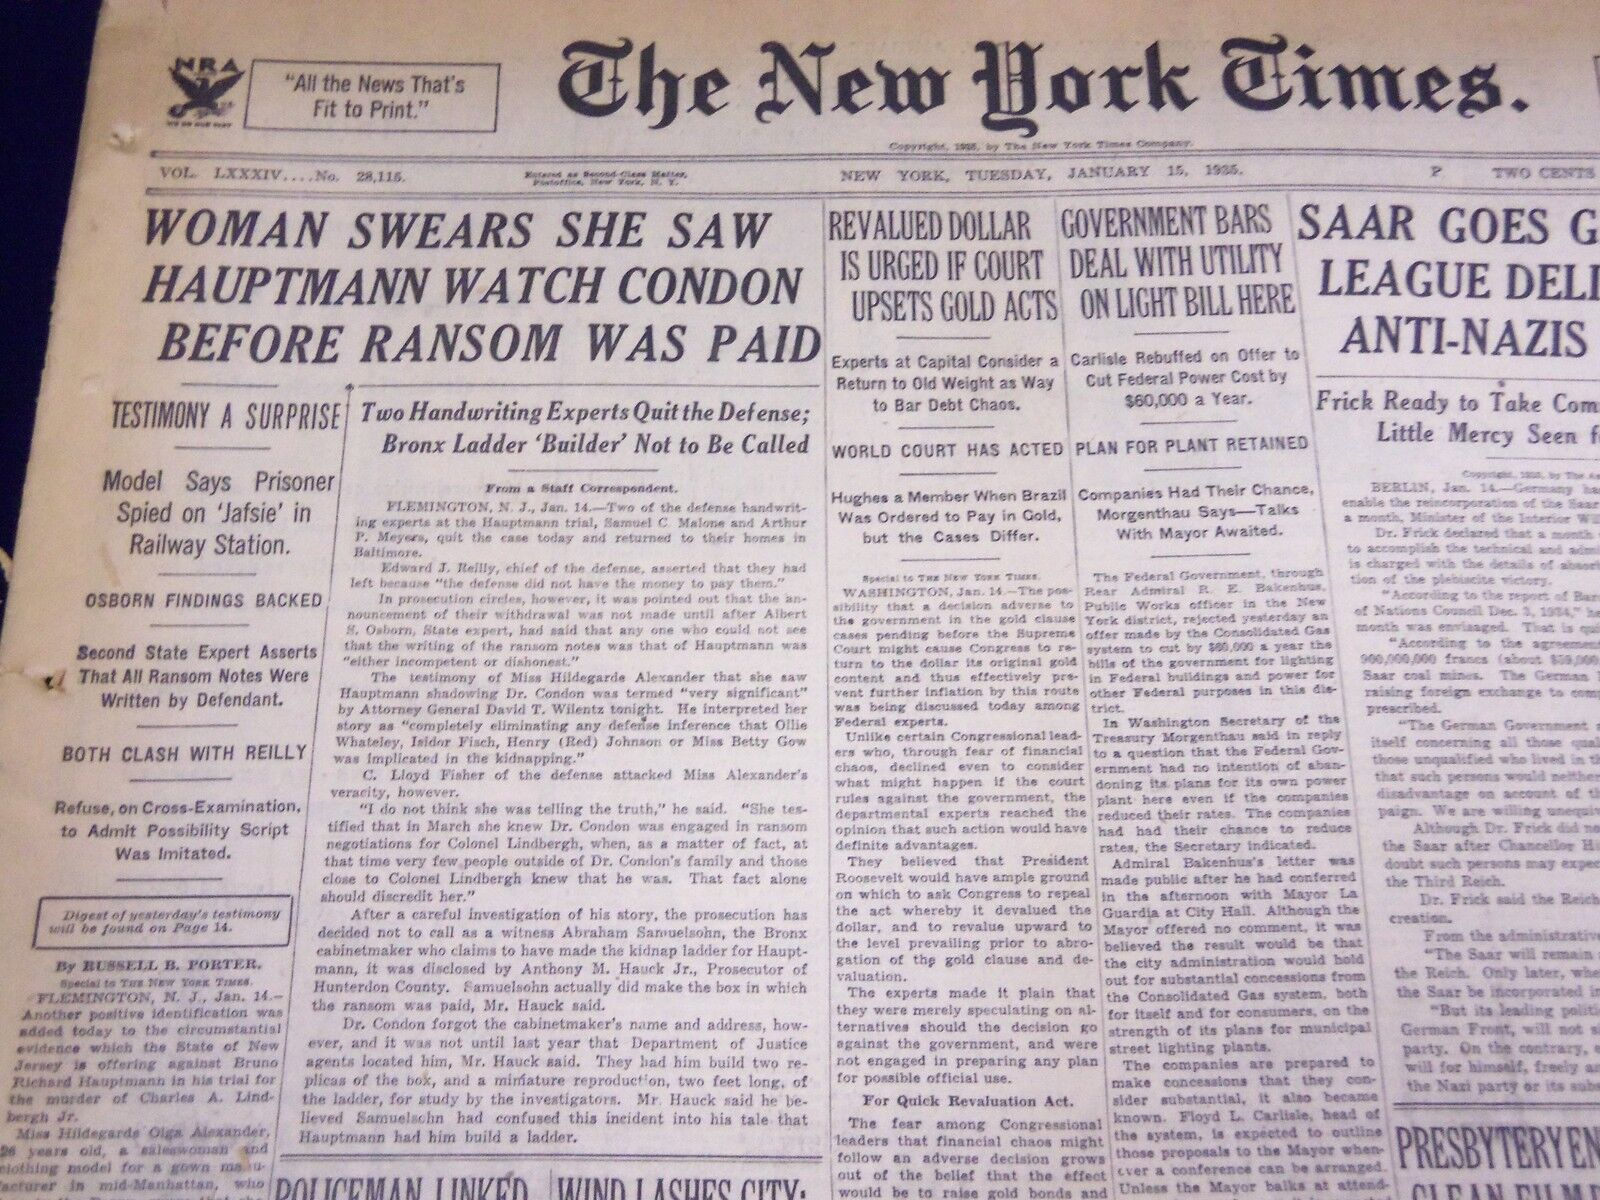 1935 JANUARY 15 NEW YORK TIMES - WOMAN SAW HAUPTMANN WATCH CONDON - NT 1928